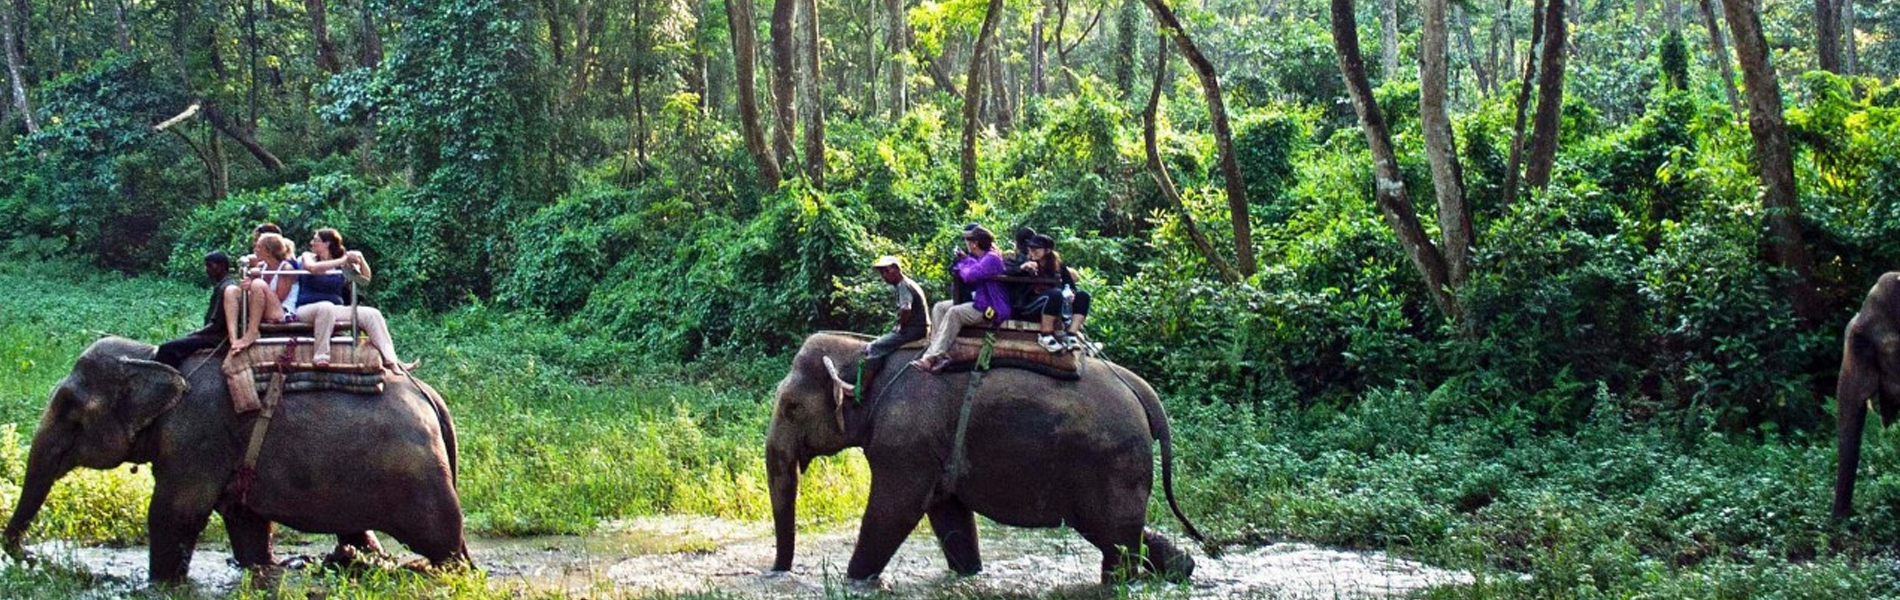 Chitwan National Park Tour - 3 Days